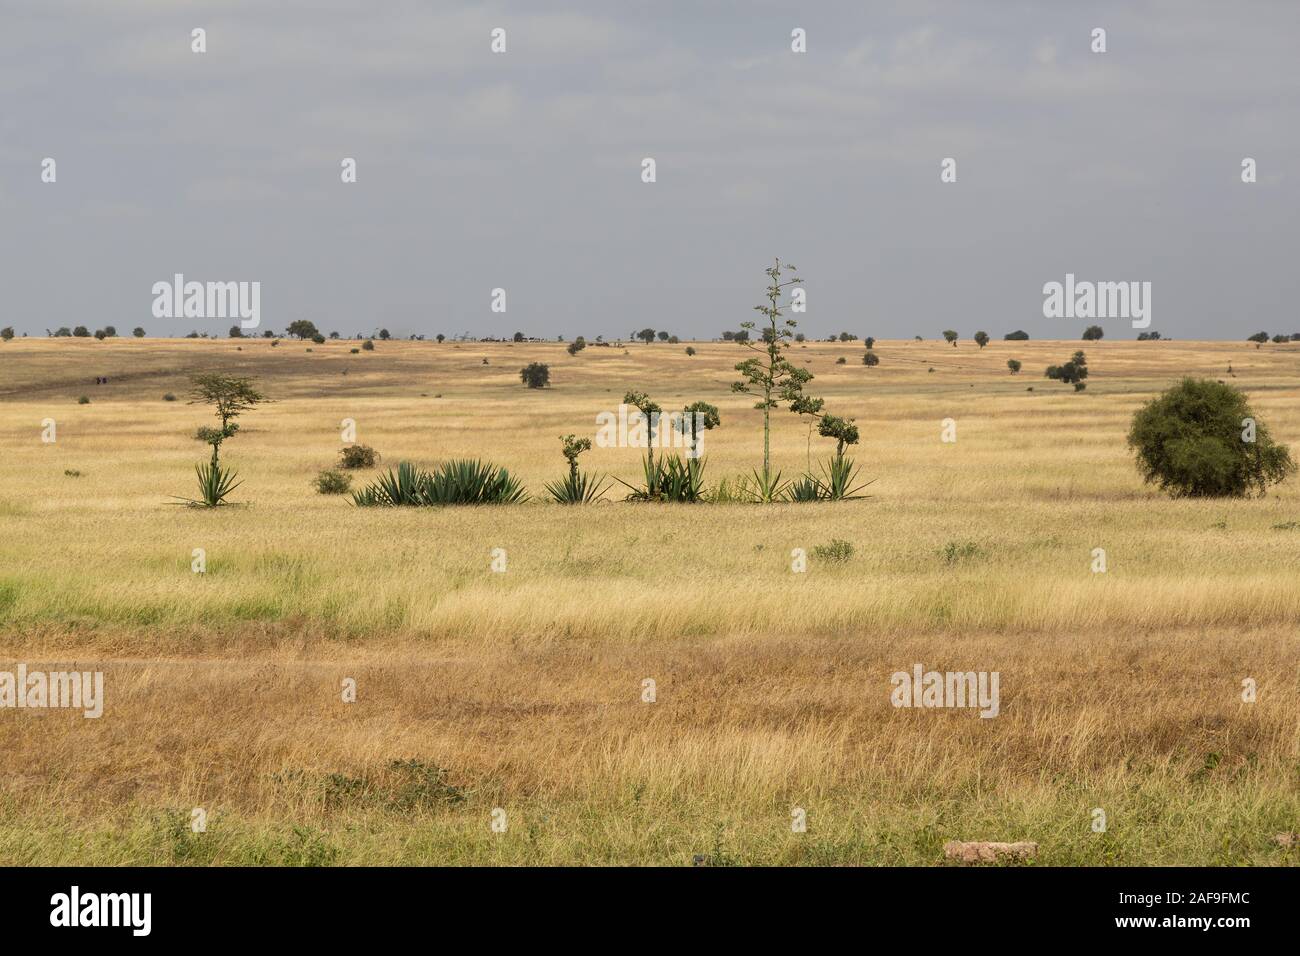 Arusha Region, Northern Tanzania. Scenic Landscape in Dry Season, Sisal in Foreground. Stock Photo